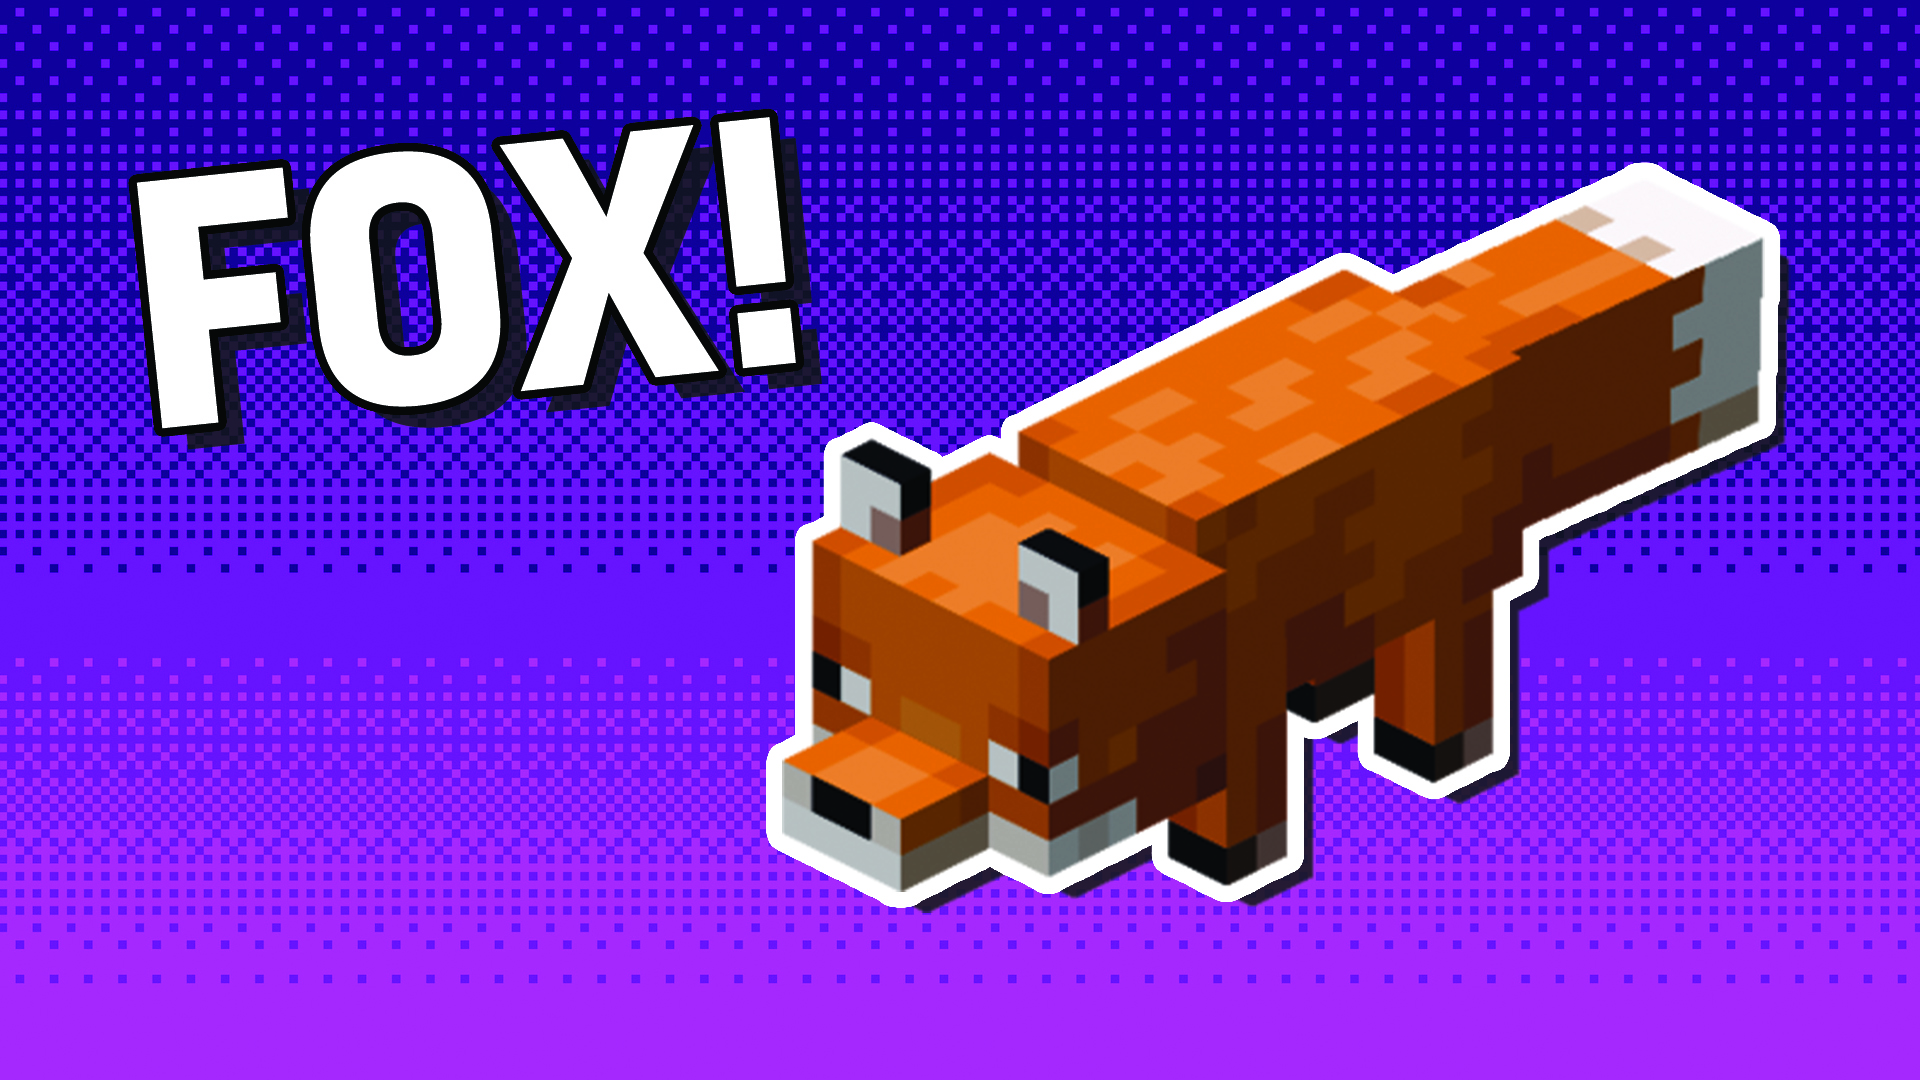 A Minecraft fox